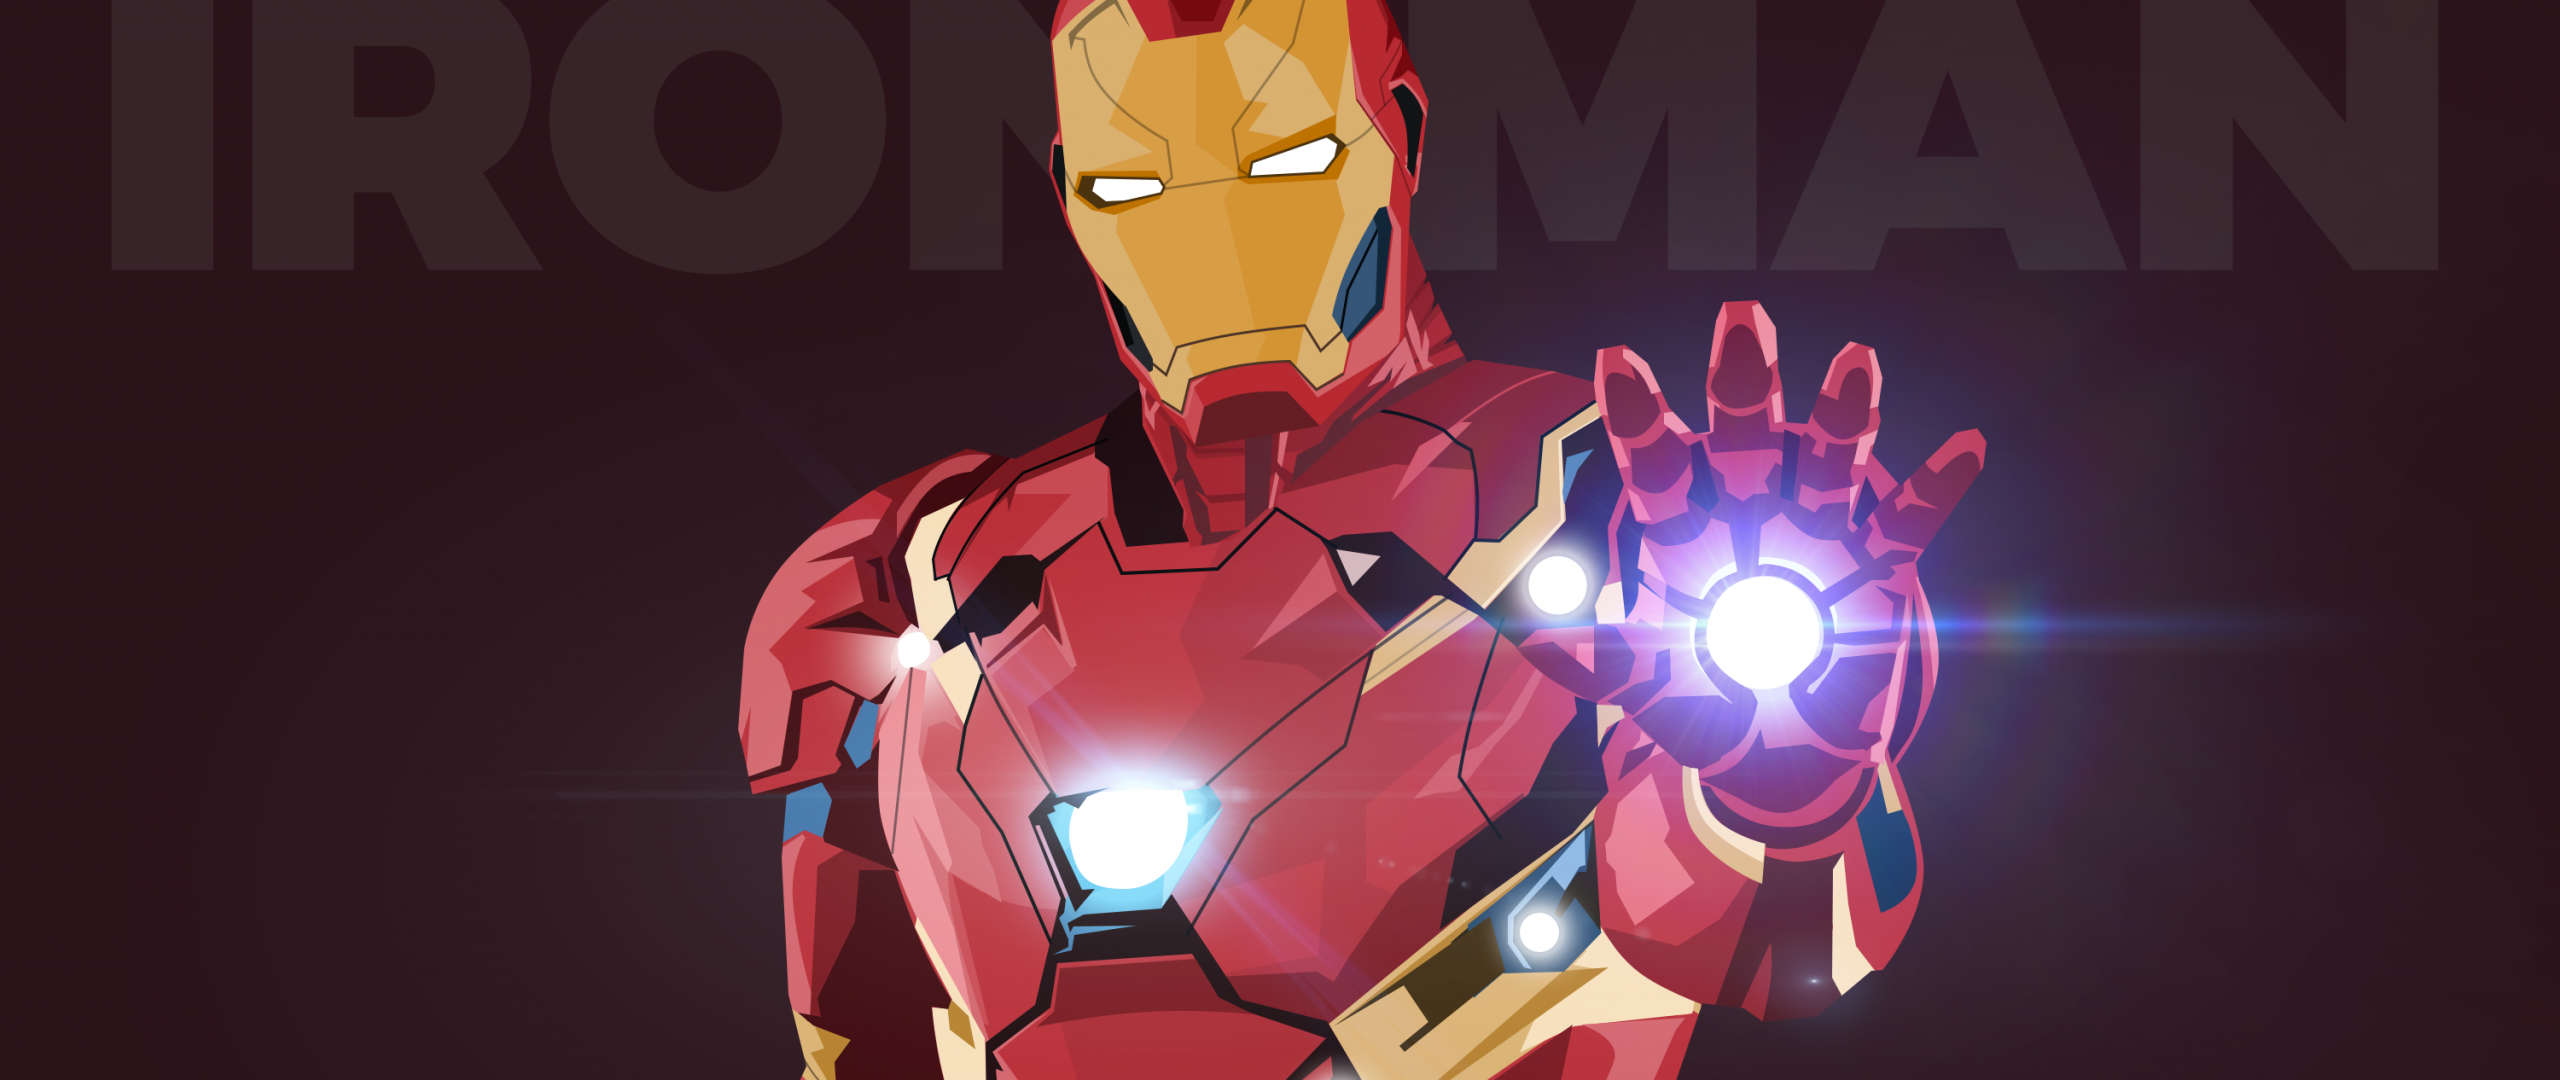 Download 2560x1080 Wallpaper Iron Man, Superhero, 4k, Minimal, Dual Wide,  Widescreen, 2560x1080 Hd Image, Background, 24402